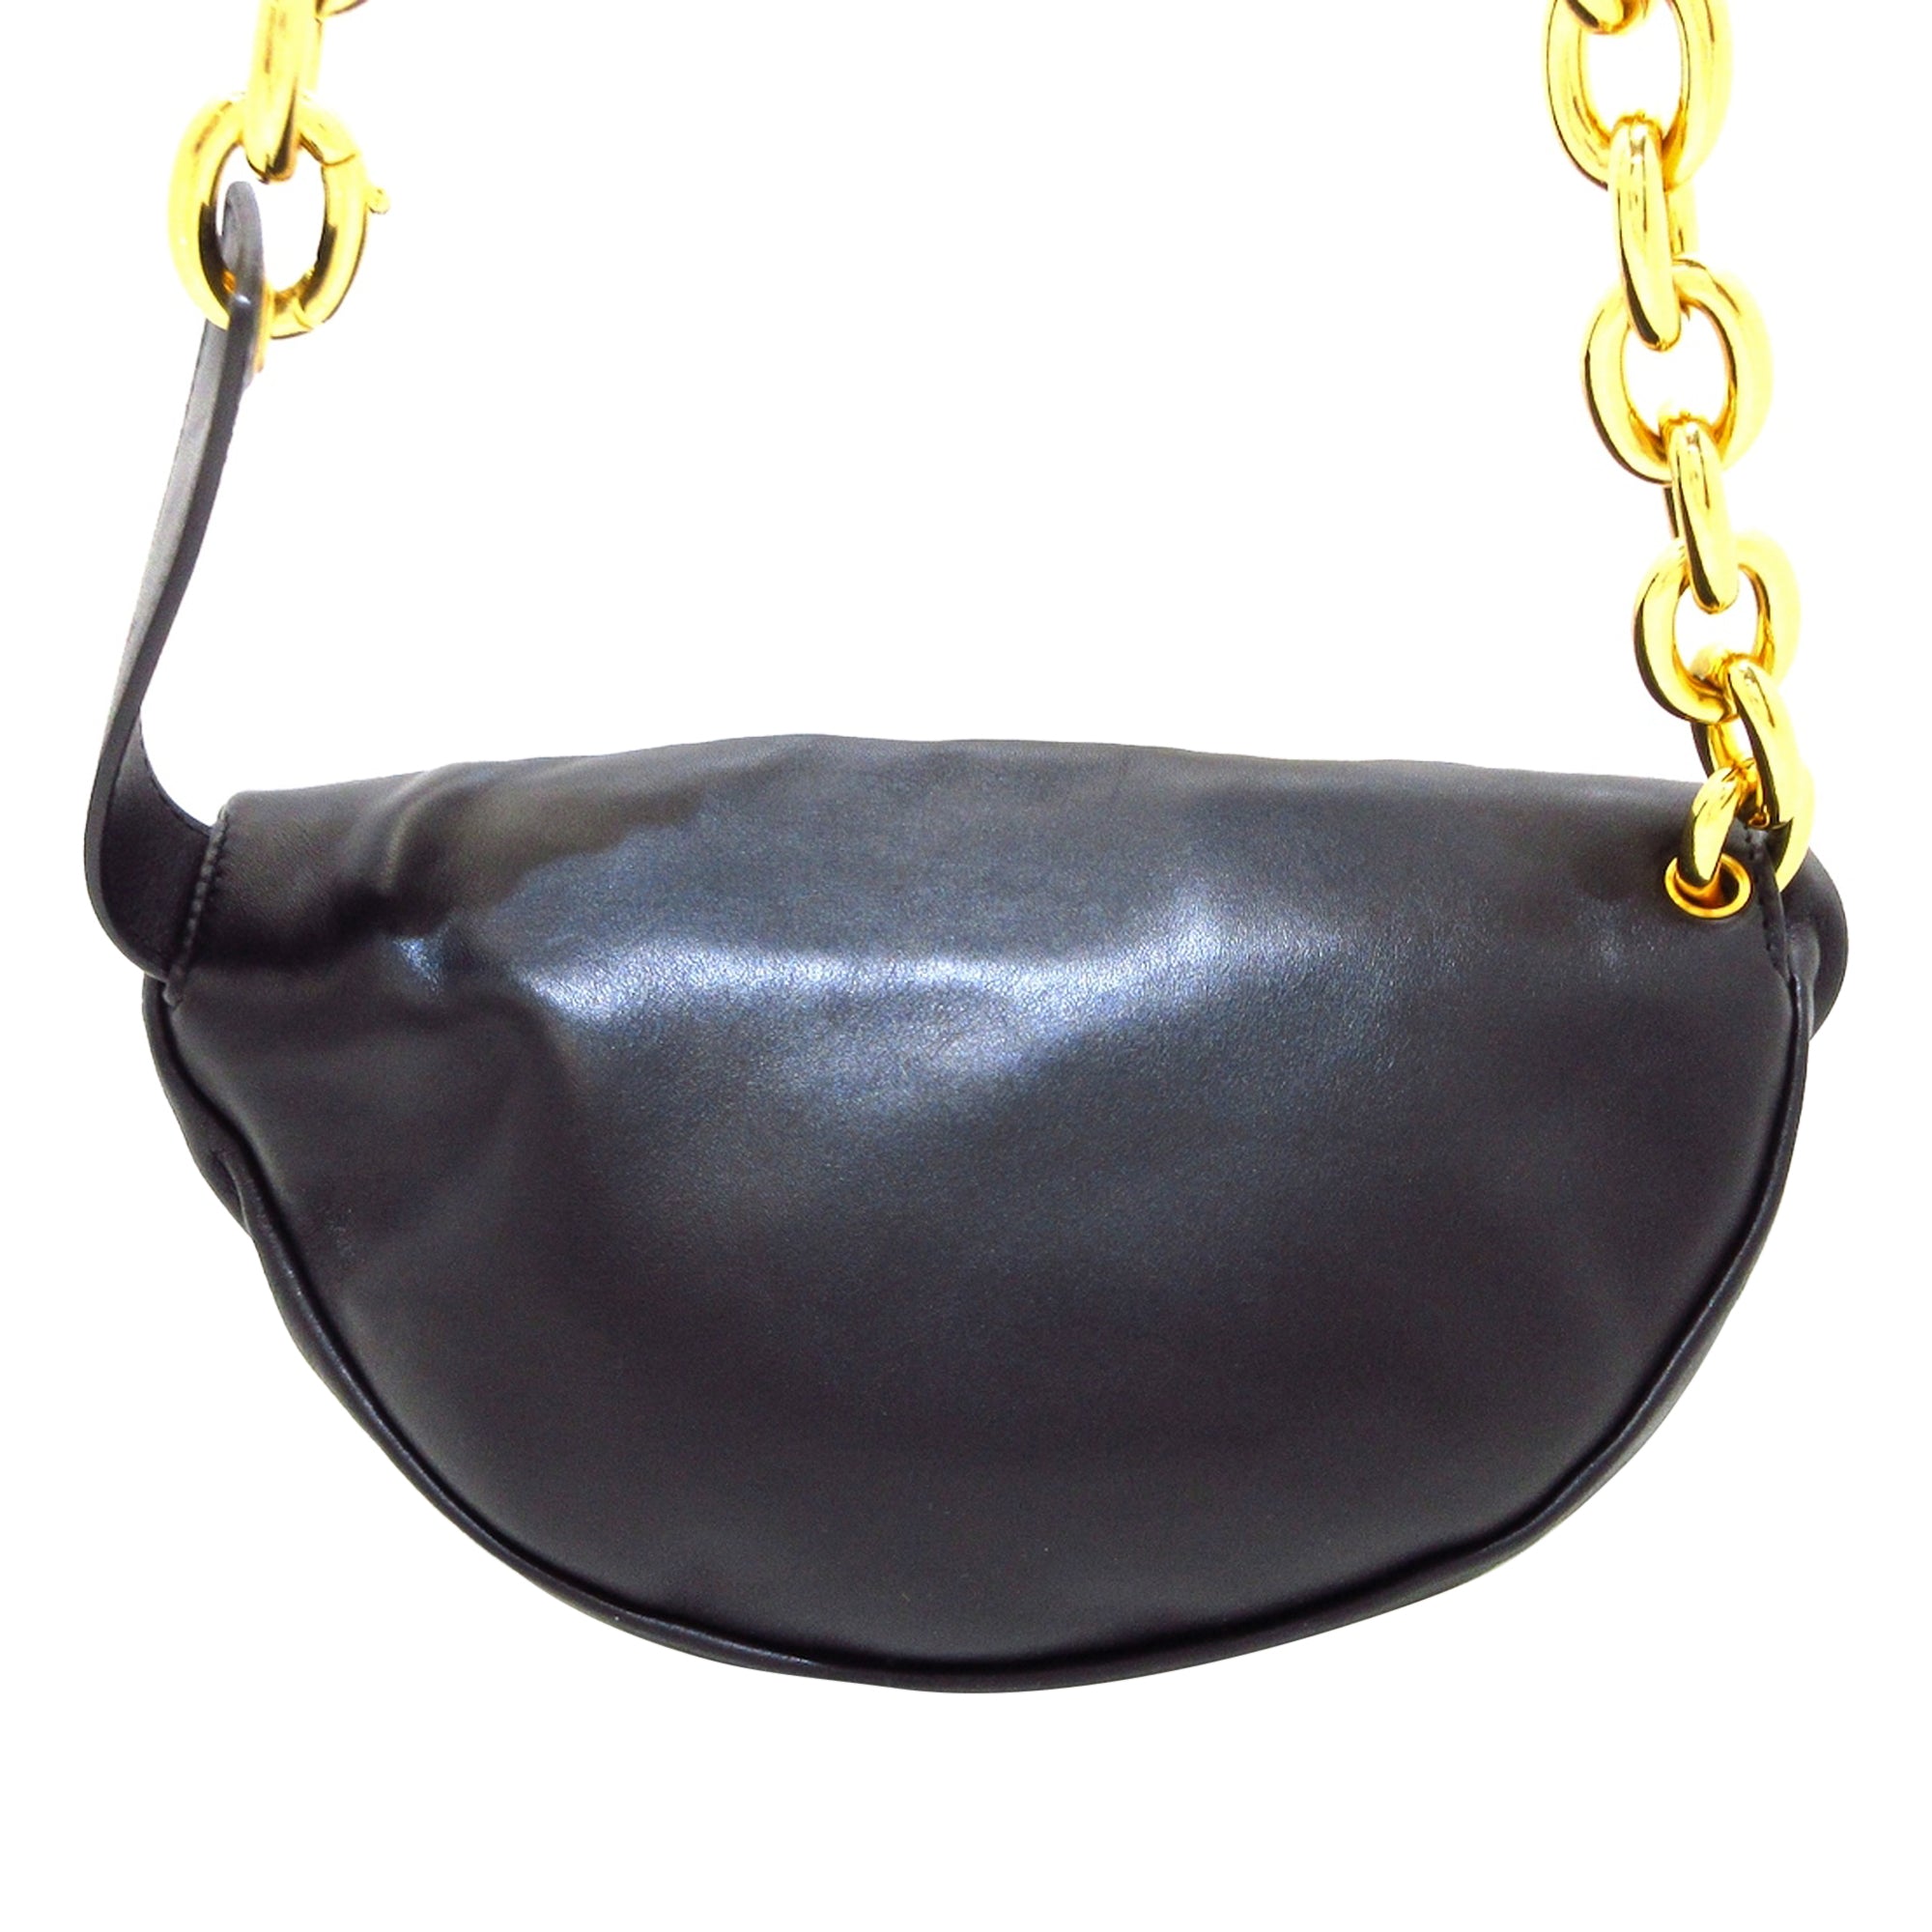 BOTTEGA VENETA The Chain Pouch black leather belt bag